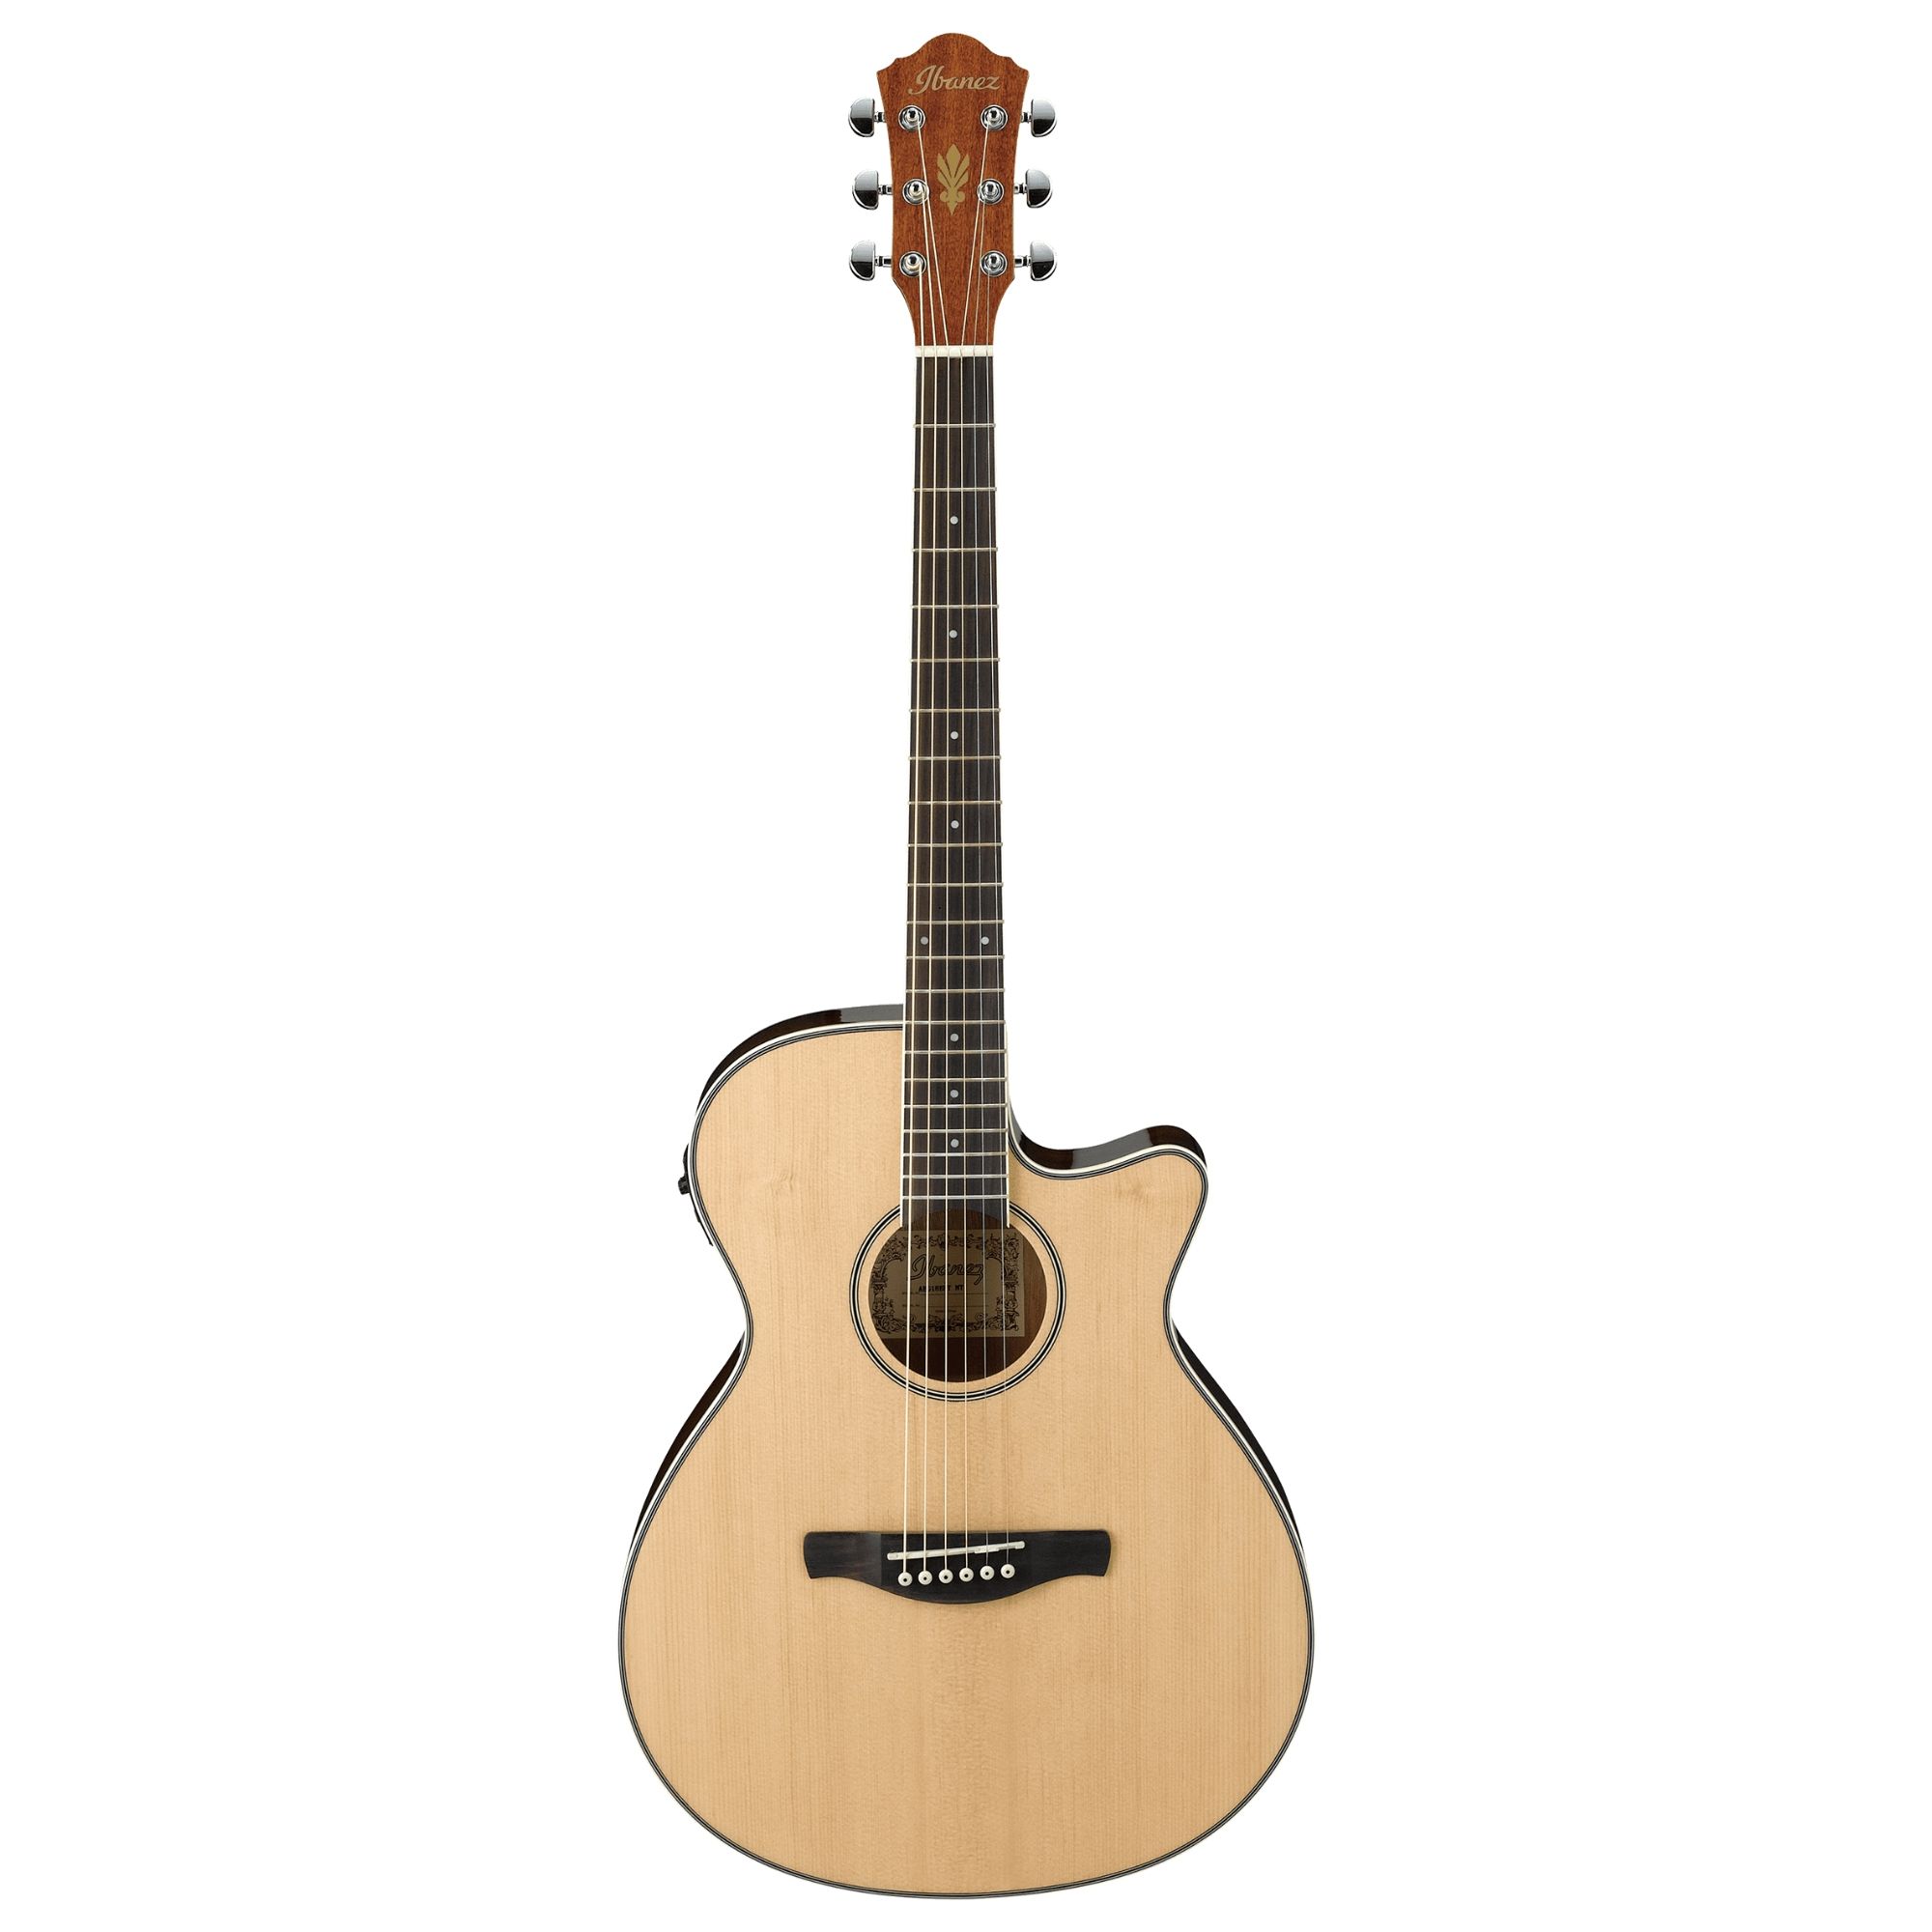 Buy Ibanez AEG8e semi acoustic Guitar online in India